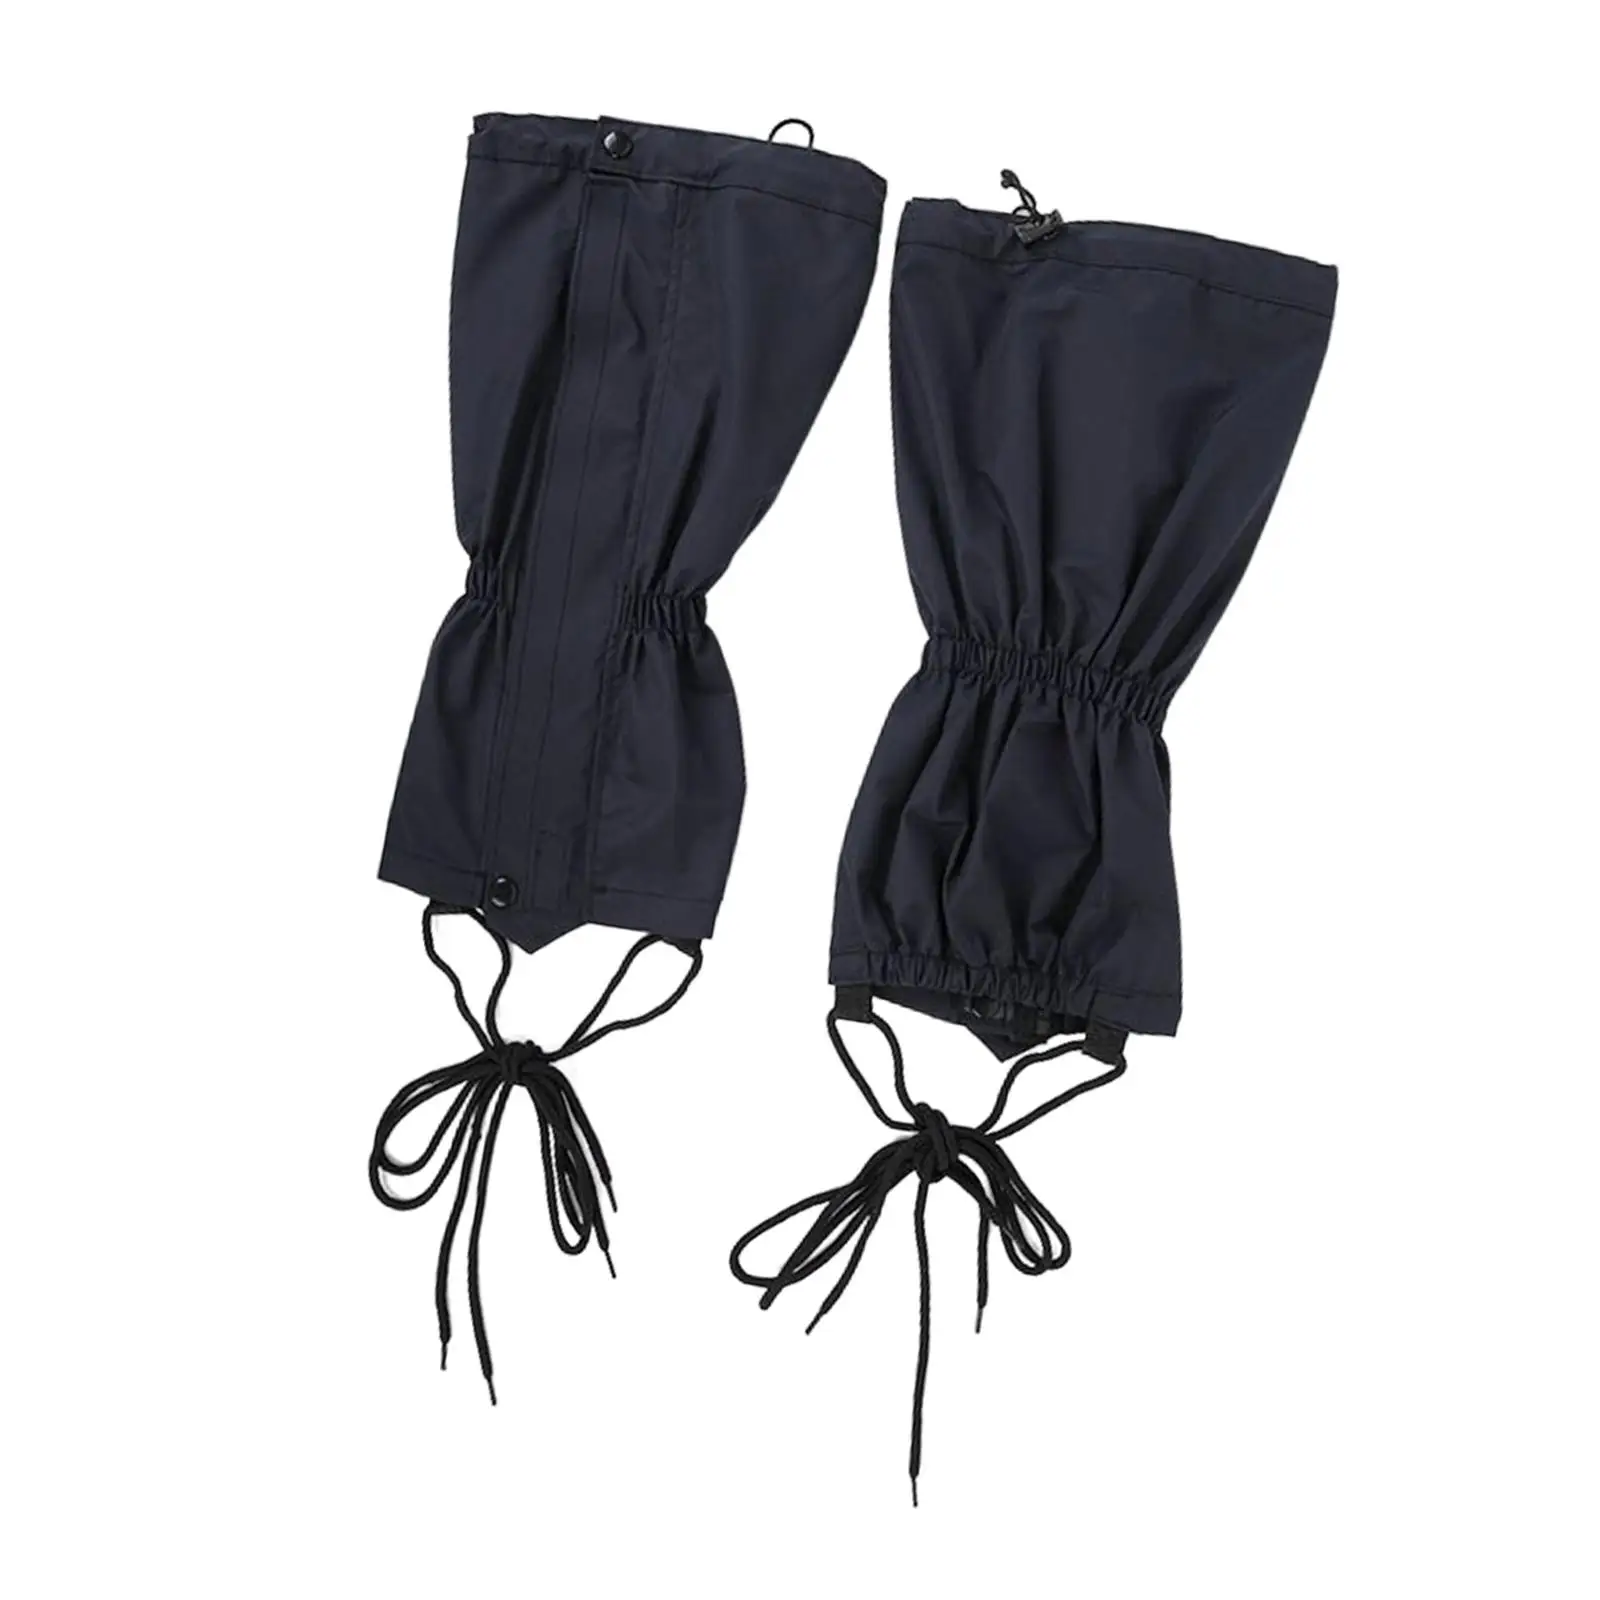 Waterproof Leg legging Shoes Covers for Hiking Skiing Ice Climbing Trekking Adults